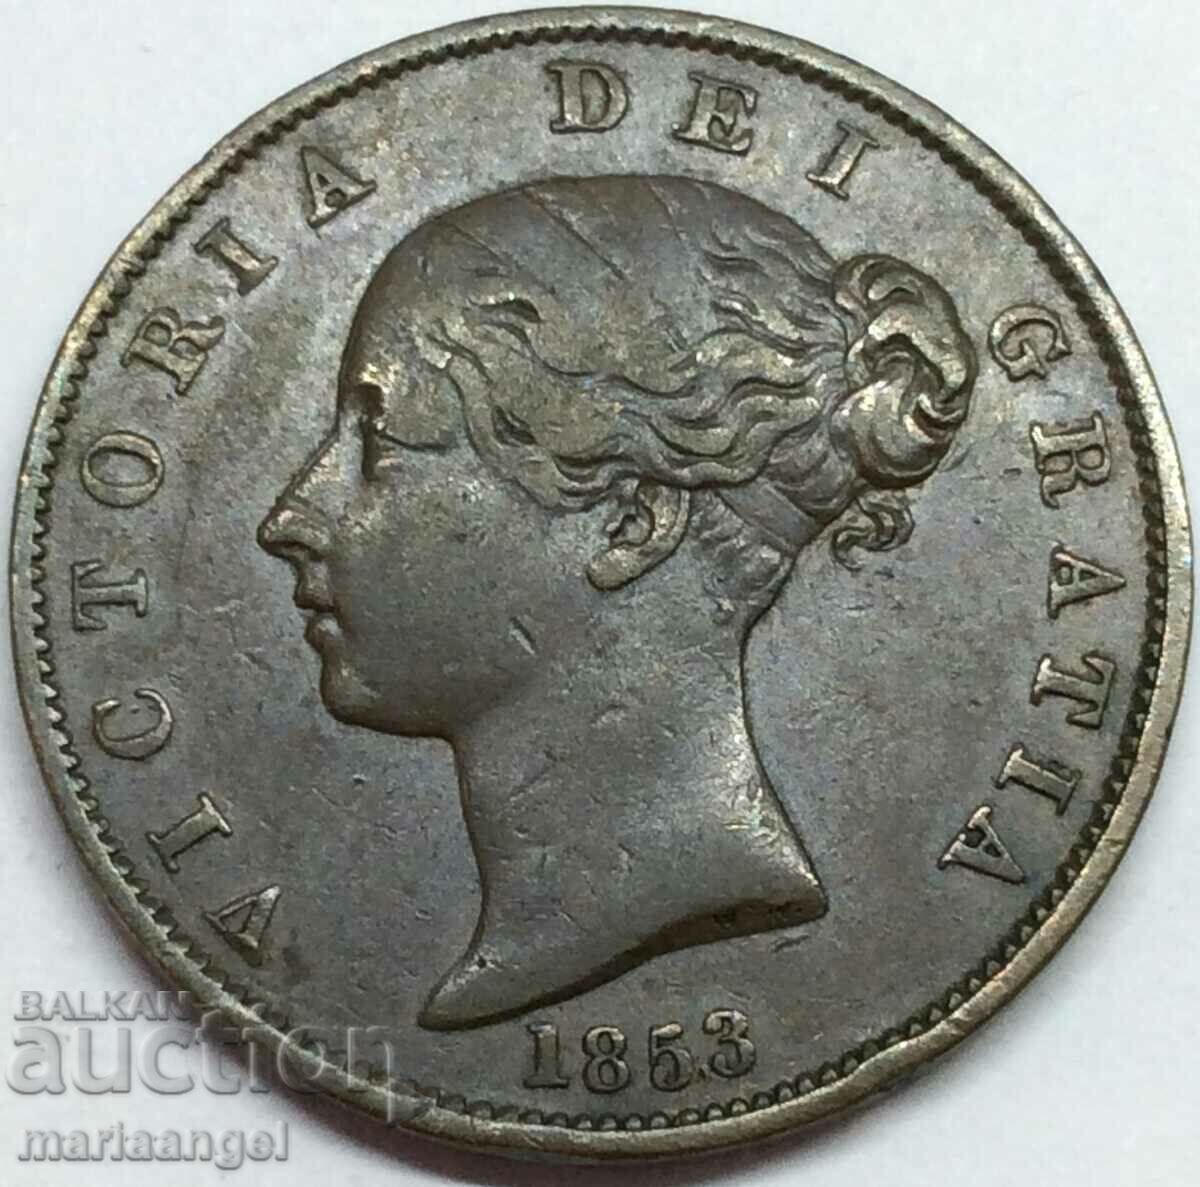 Great Britain 1/2 penny 1853 9.61g 28mm bronze - rare